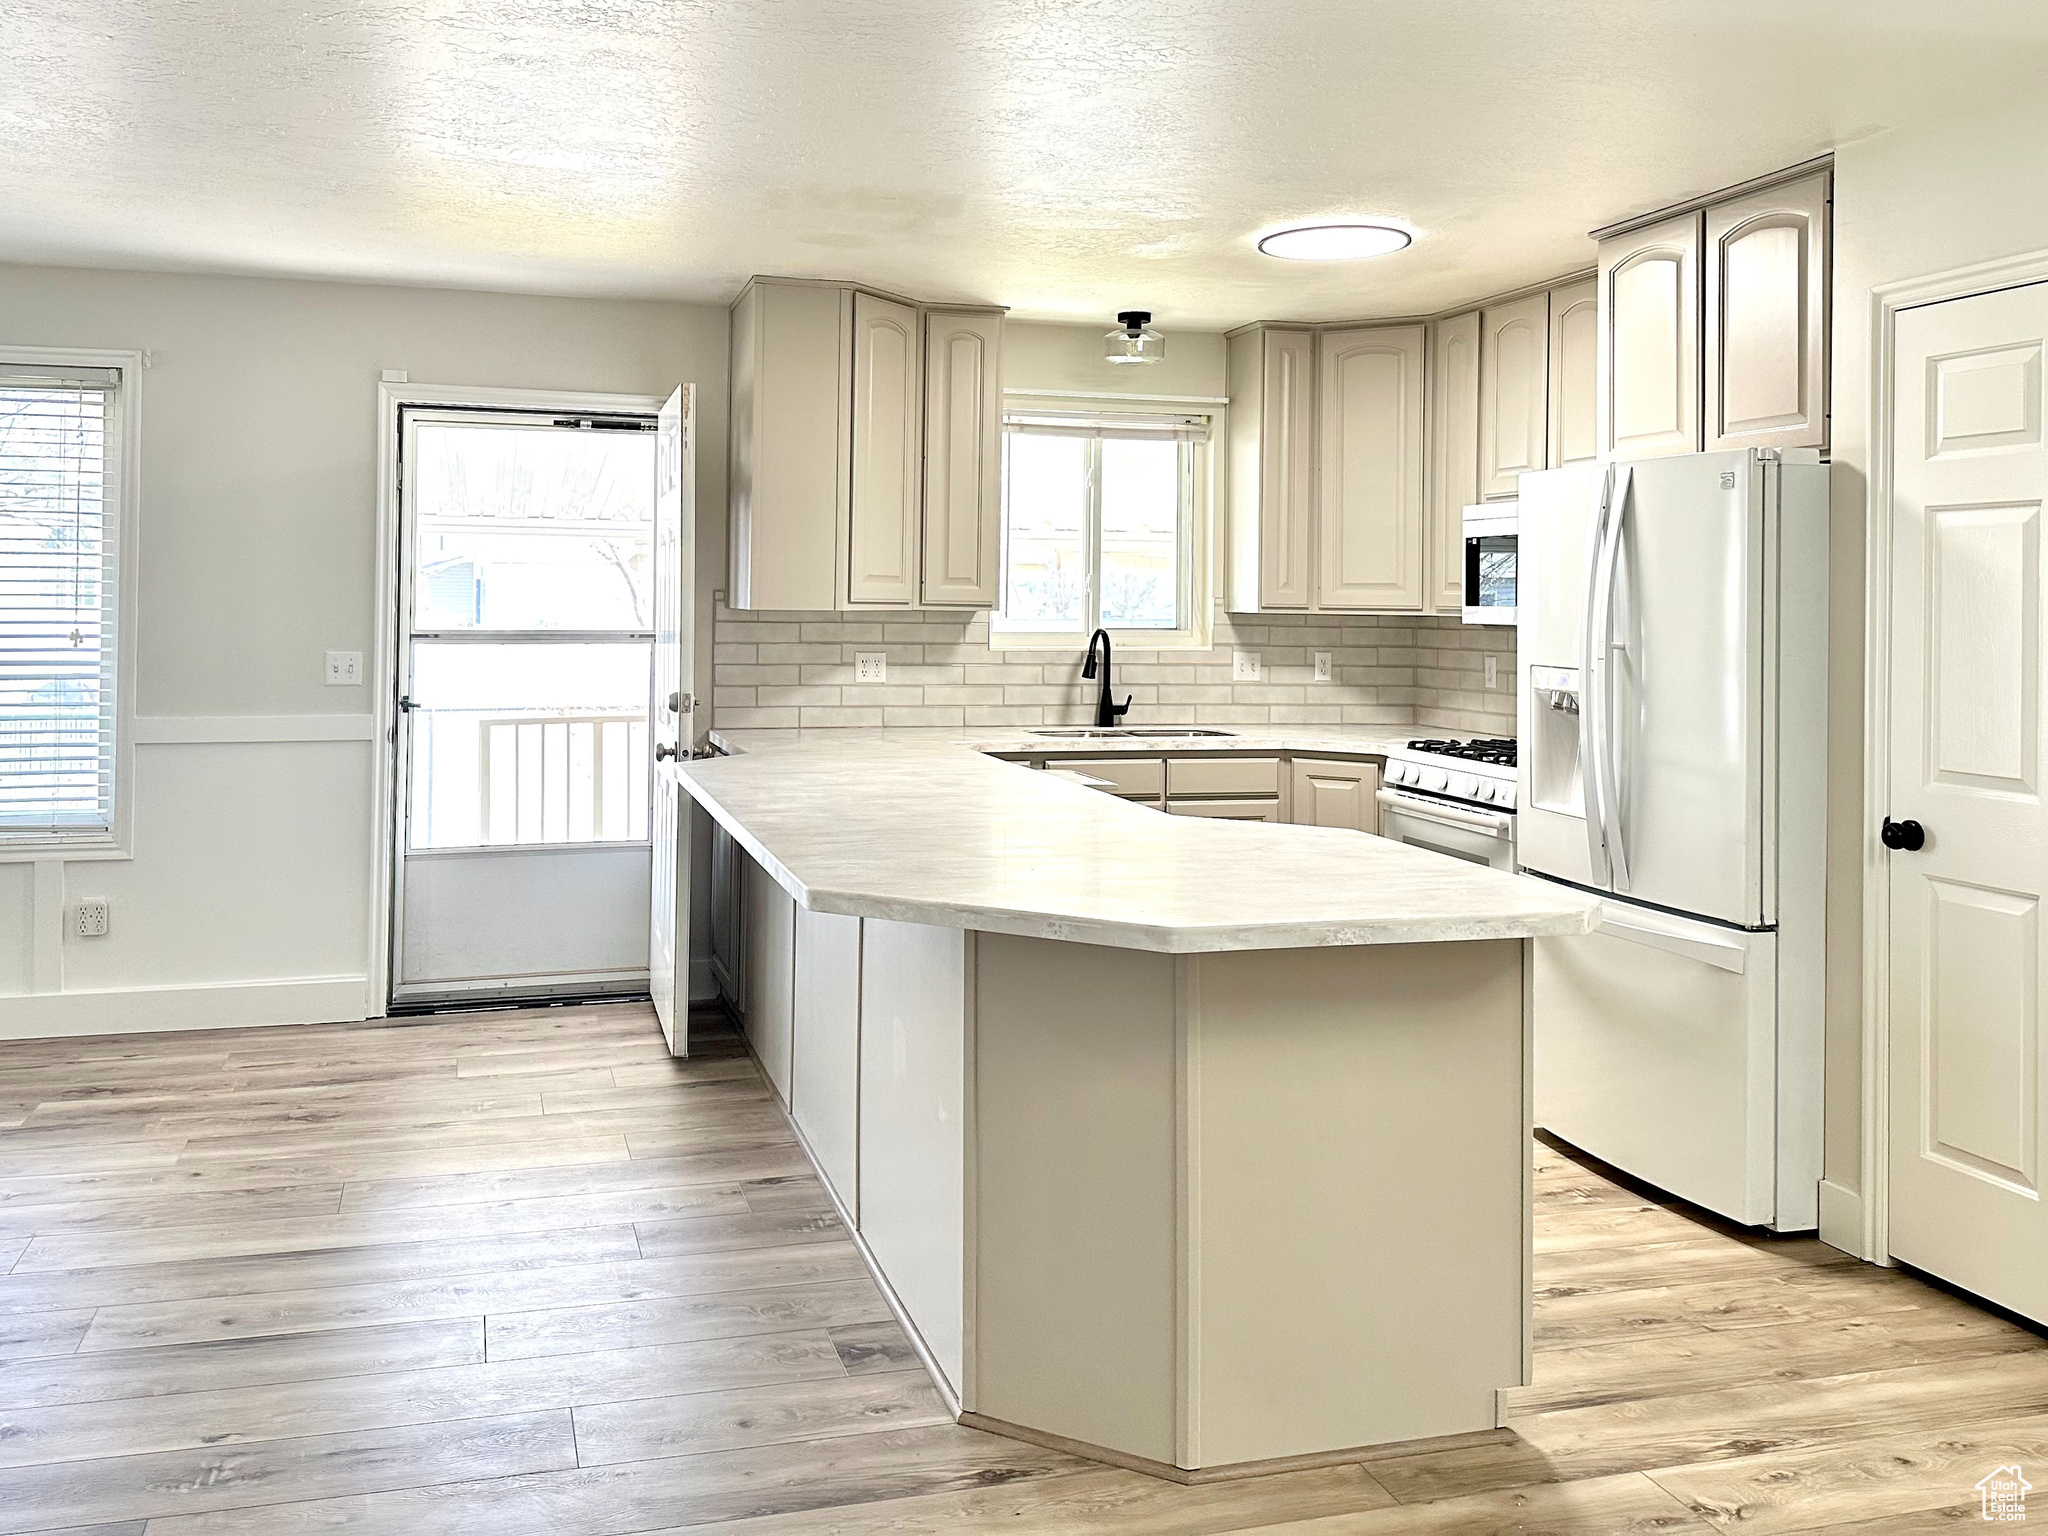 Kitchen featuring kitchen peninsula, white appliances, light hardwood / wood-style flooring, backsplash, and sink